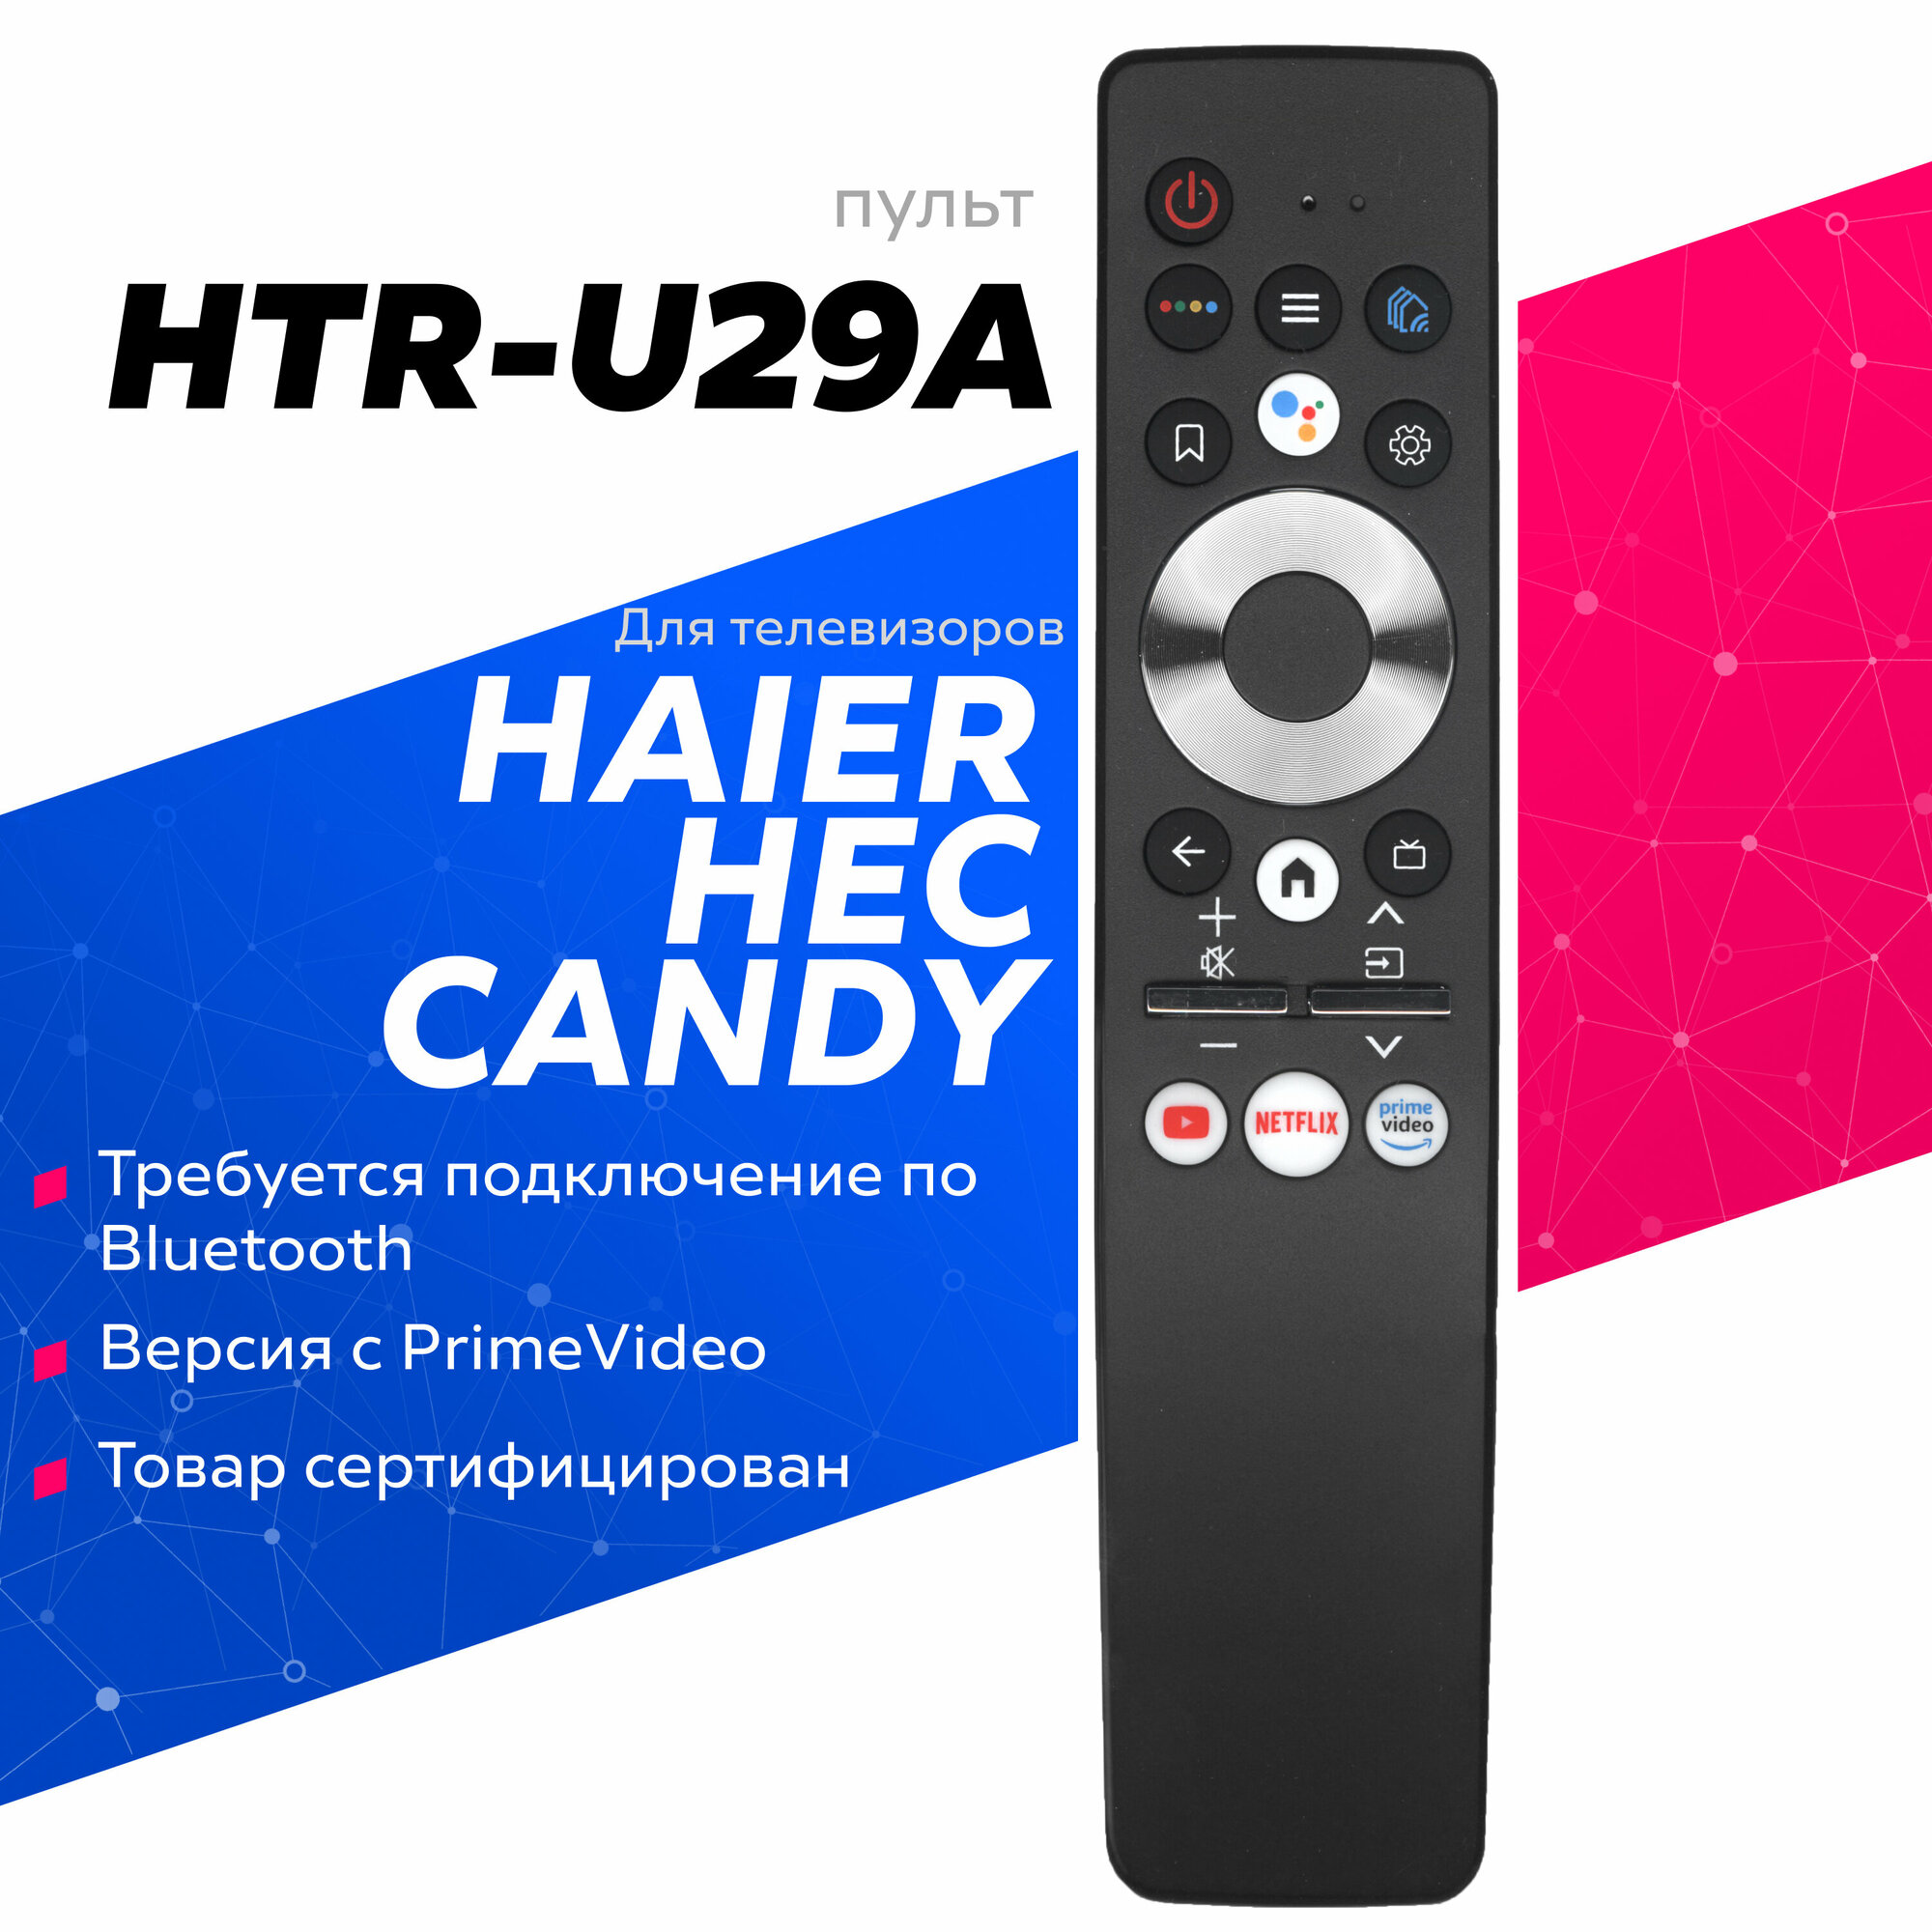 Пульт для телевизоров HAIER HE-V5 (HTR-U29A) VOICE LCDTV